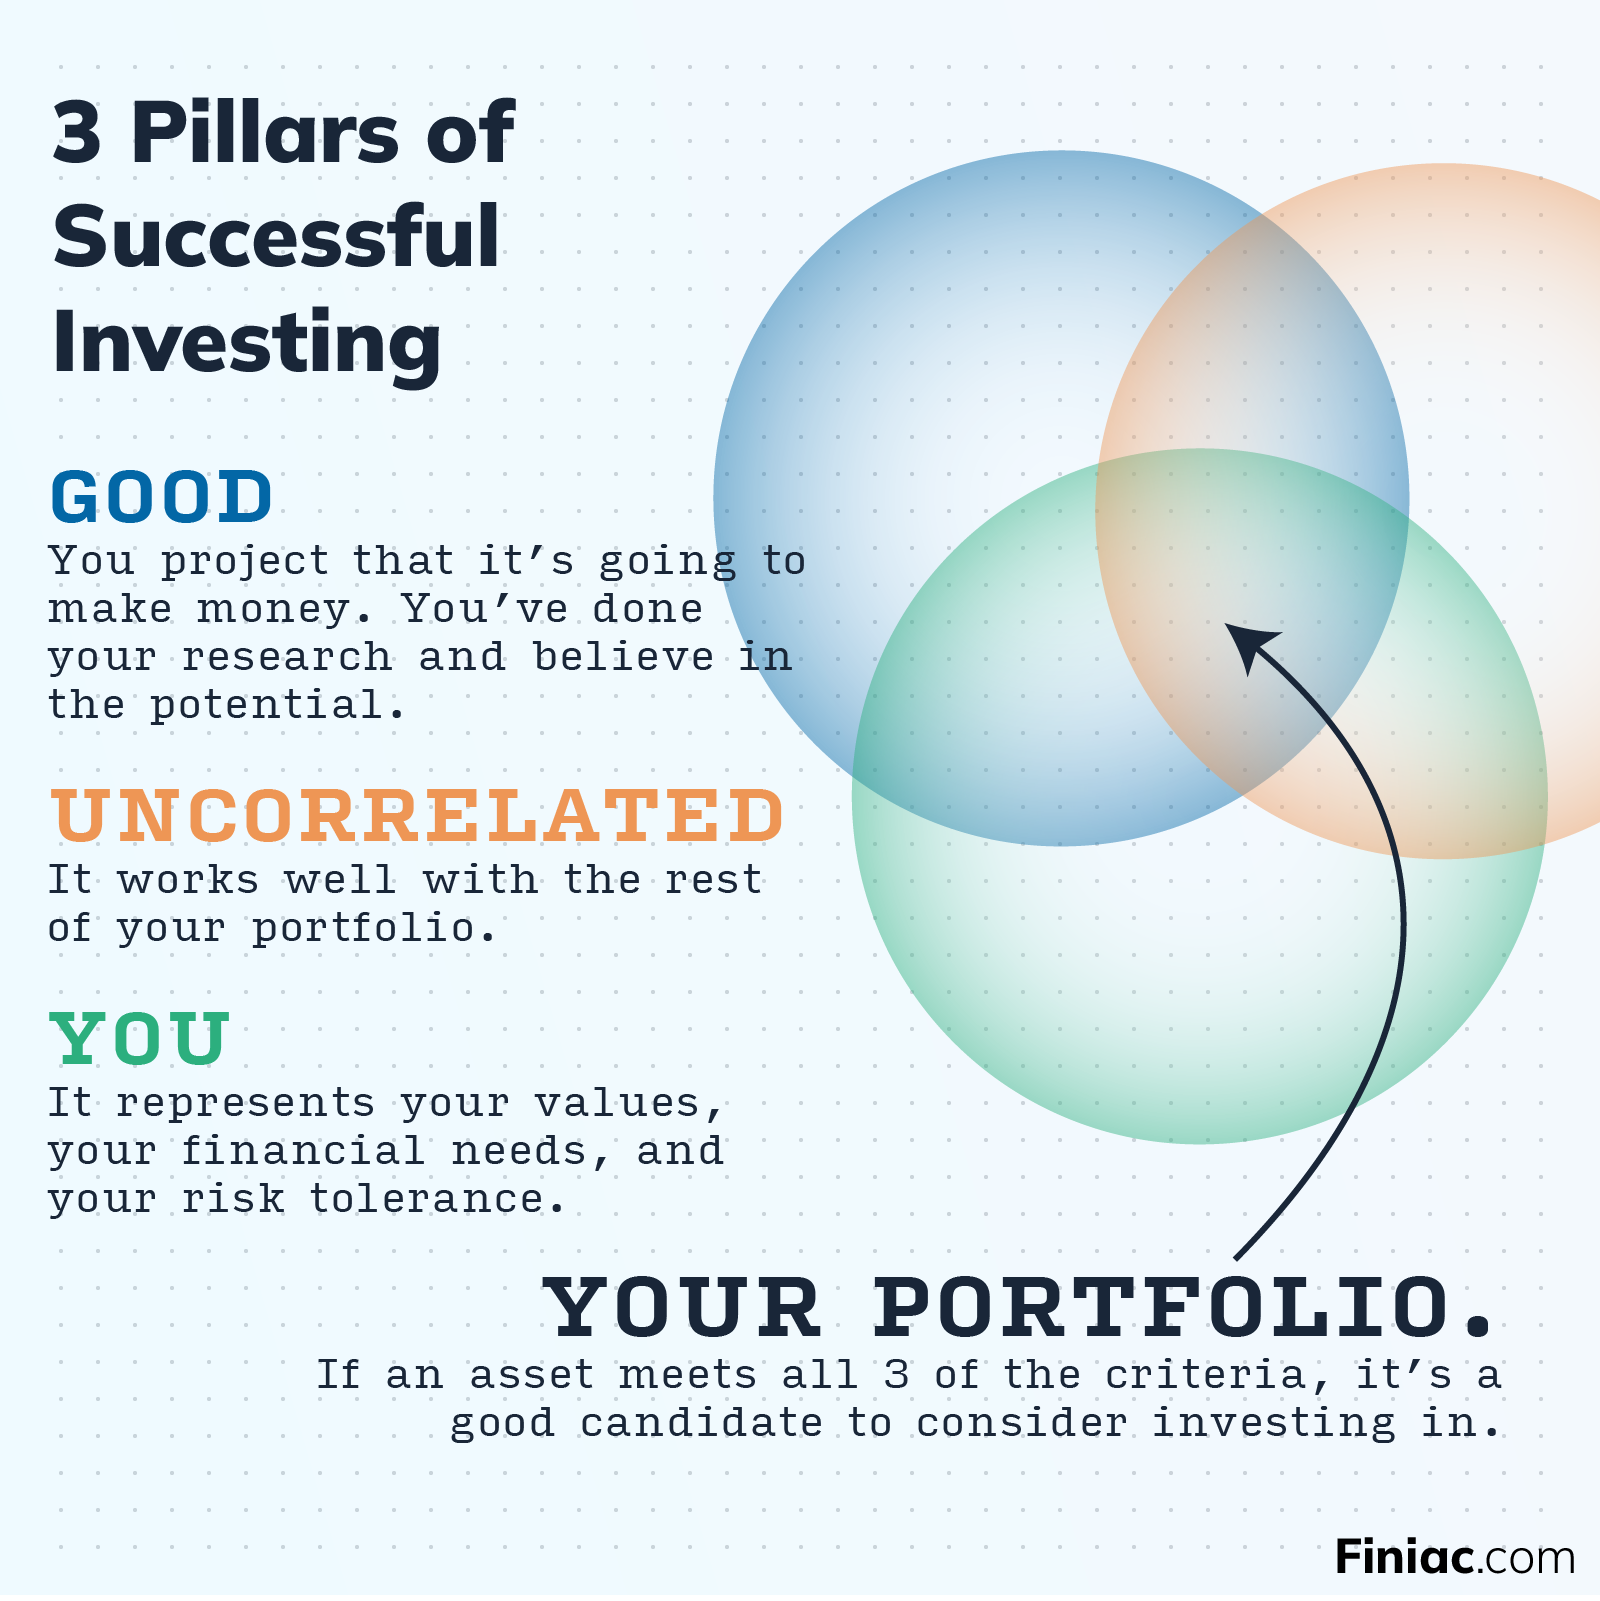 3 Pillar of Successful Investing as a Venn diagram